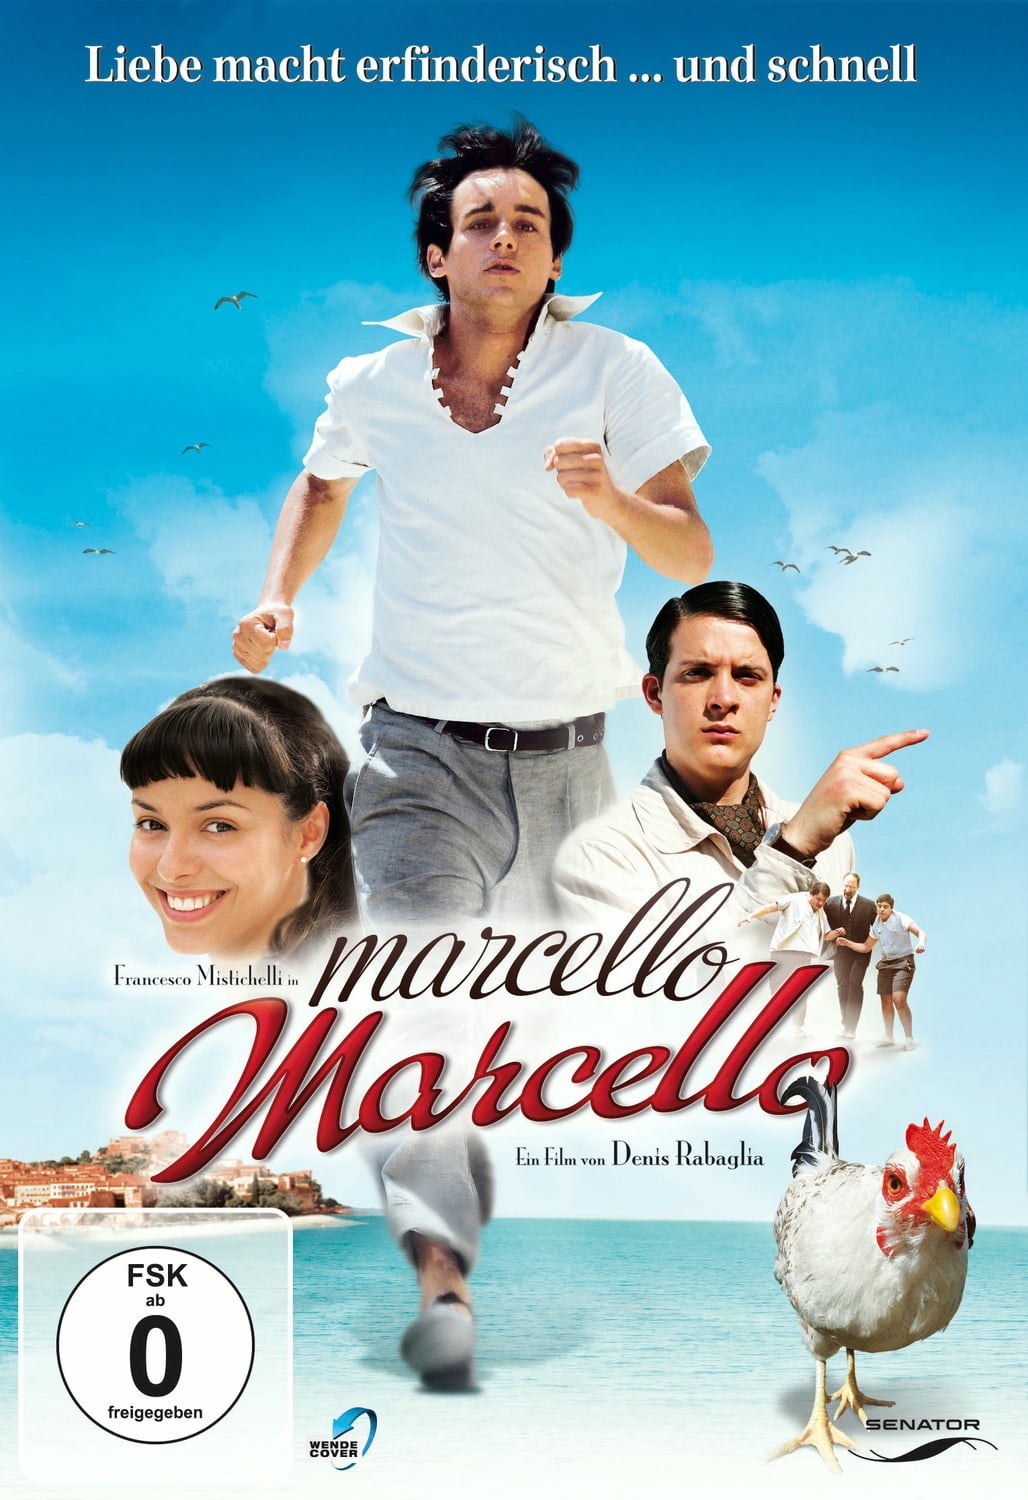 Plakat von "Marcello Marcello"